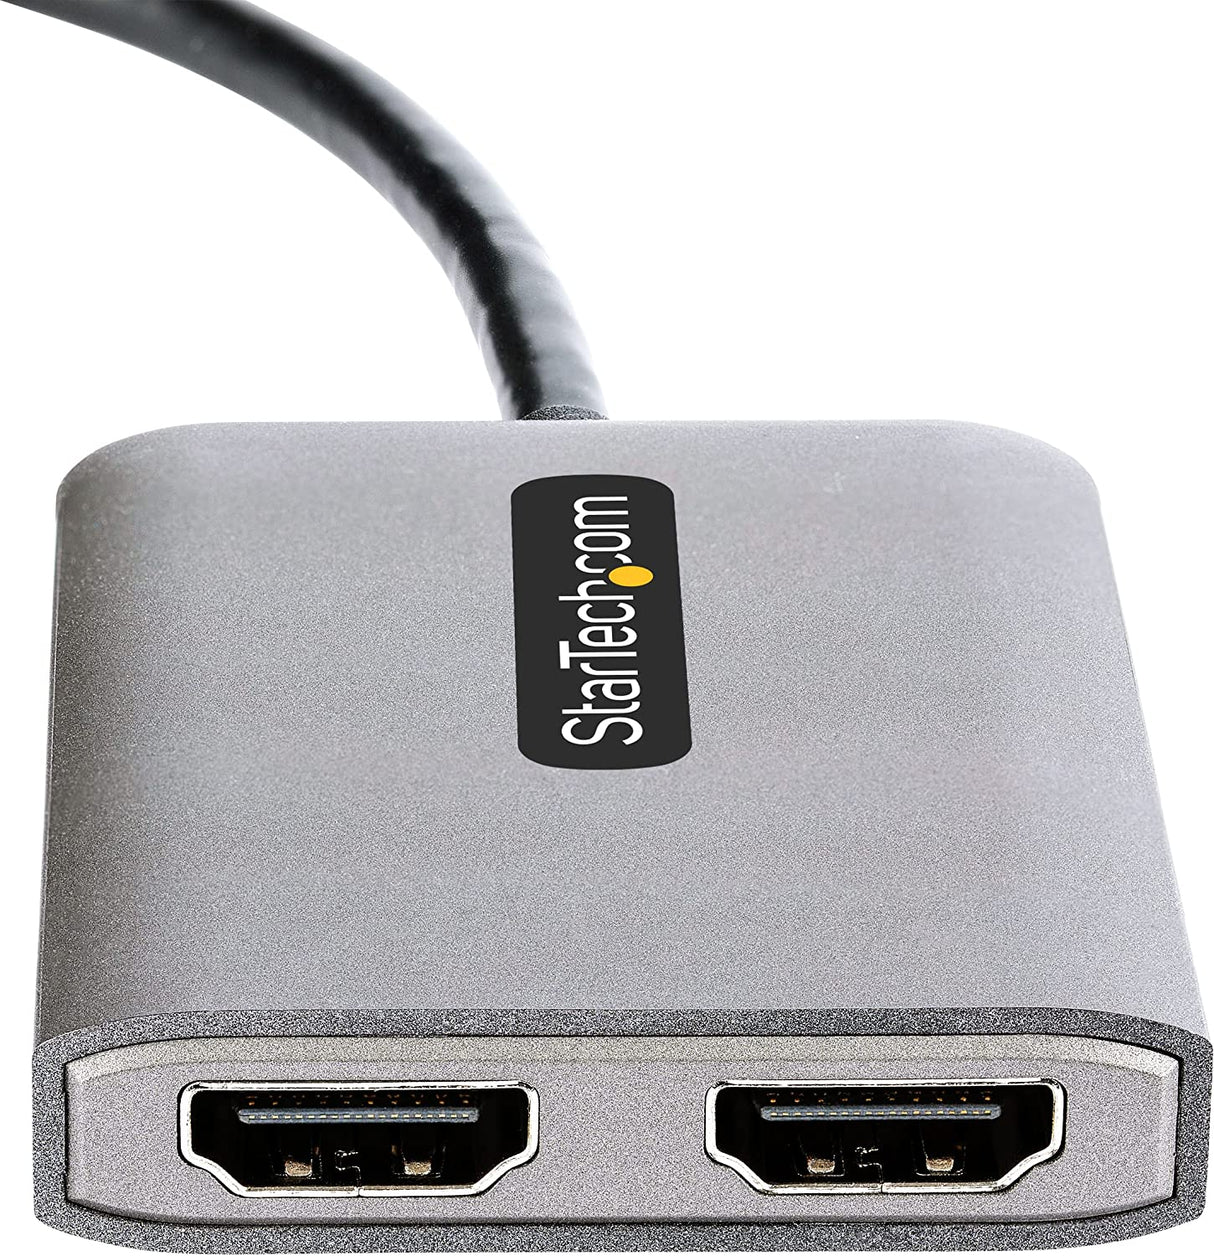 StarTech.com DP to Dual HDMI MST HUB - Dual HDMI 4K 60Hz - DisplayPort Multi Monitor Adapter with 1ft / 30cm Cable - DP 1.4 Multi Stream Transport Hub, DSC | HBR3 - DP to HDMI Splitter (MST14DP122HD)